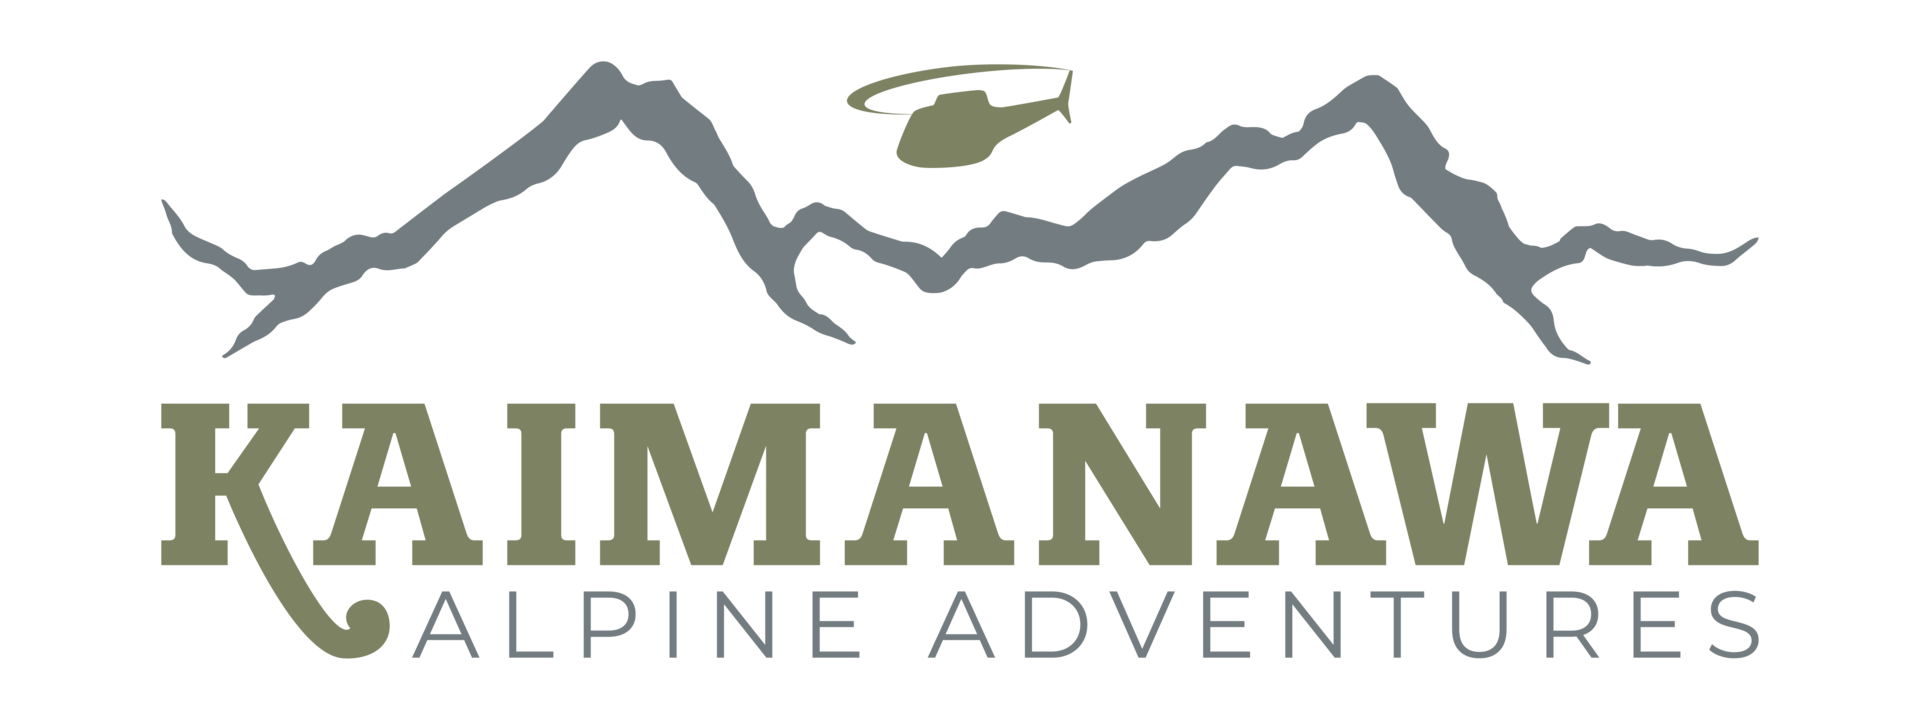 Kaimanawa Alpine Adventures Logo_colour.png